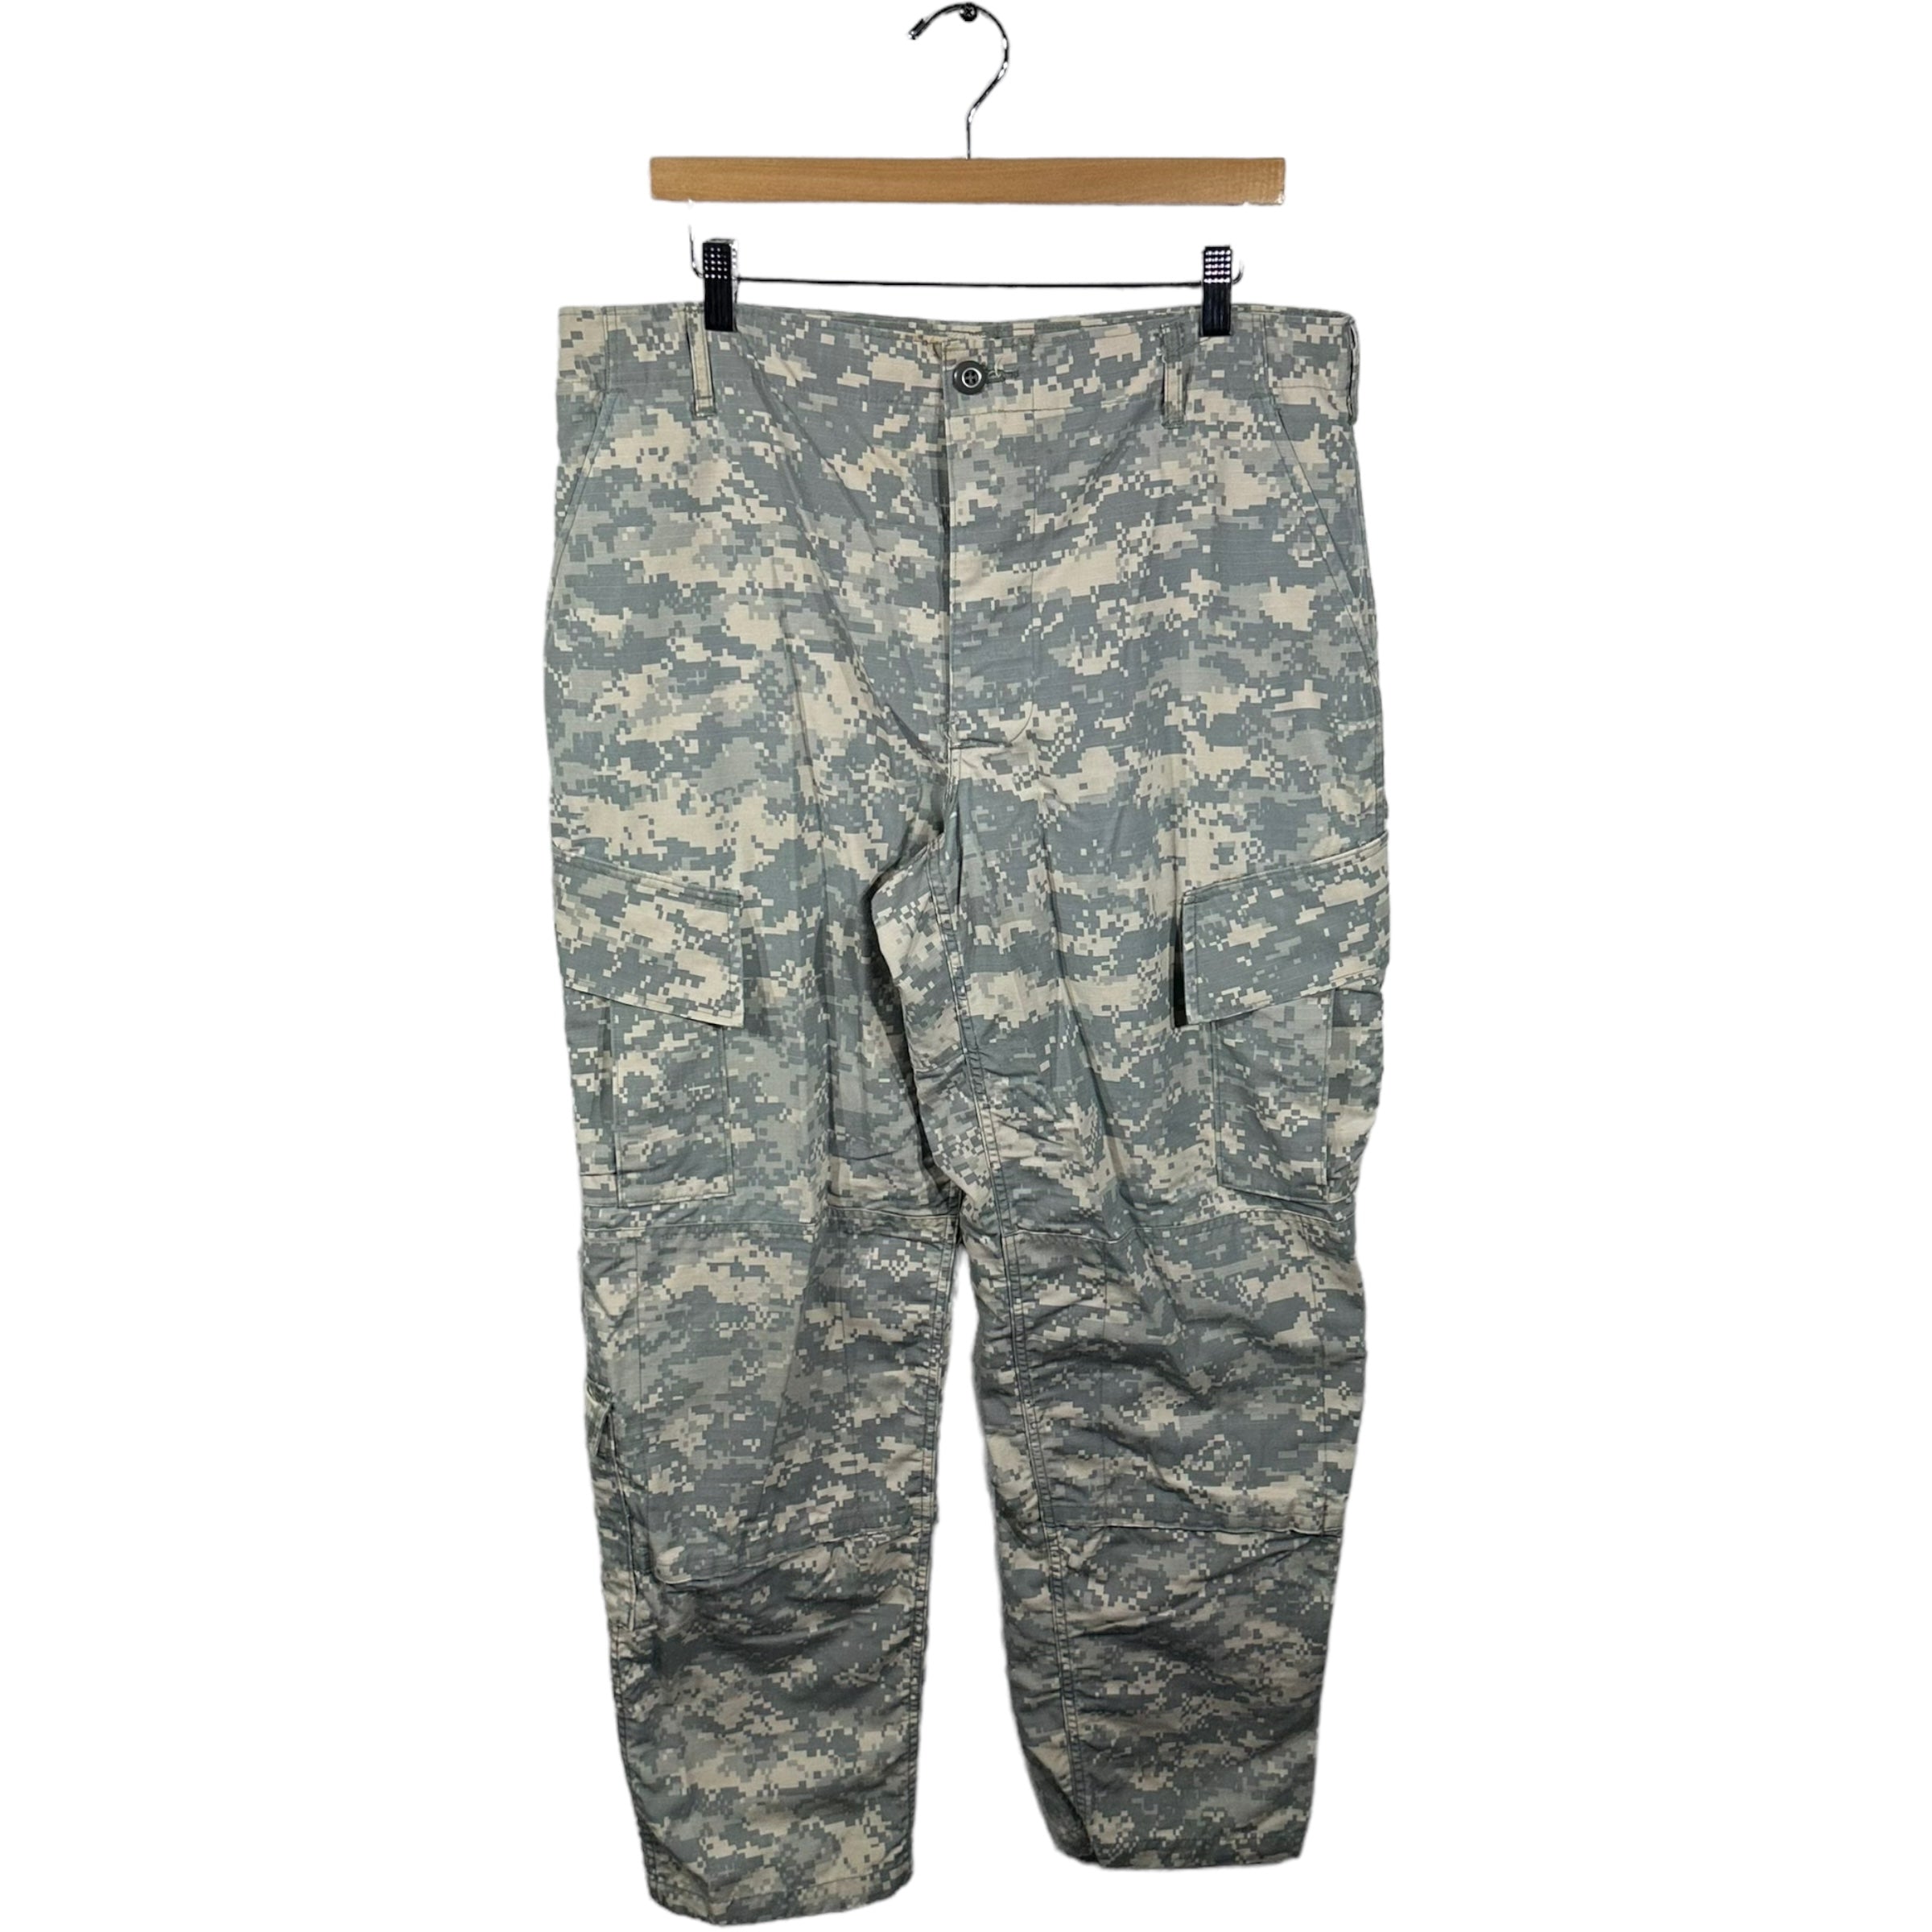 Vintage Military Digi Camo Cargo Pants